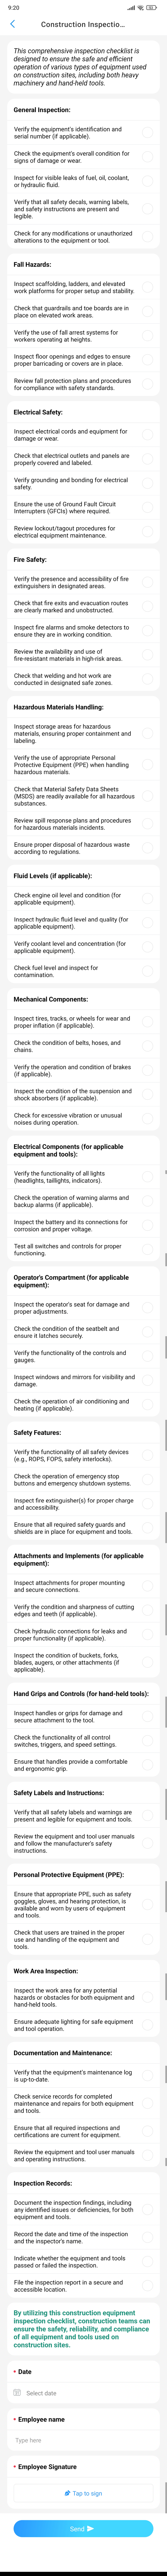 Construction Inspection Checklist screenshot